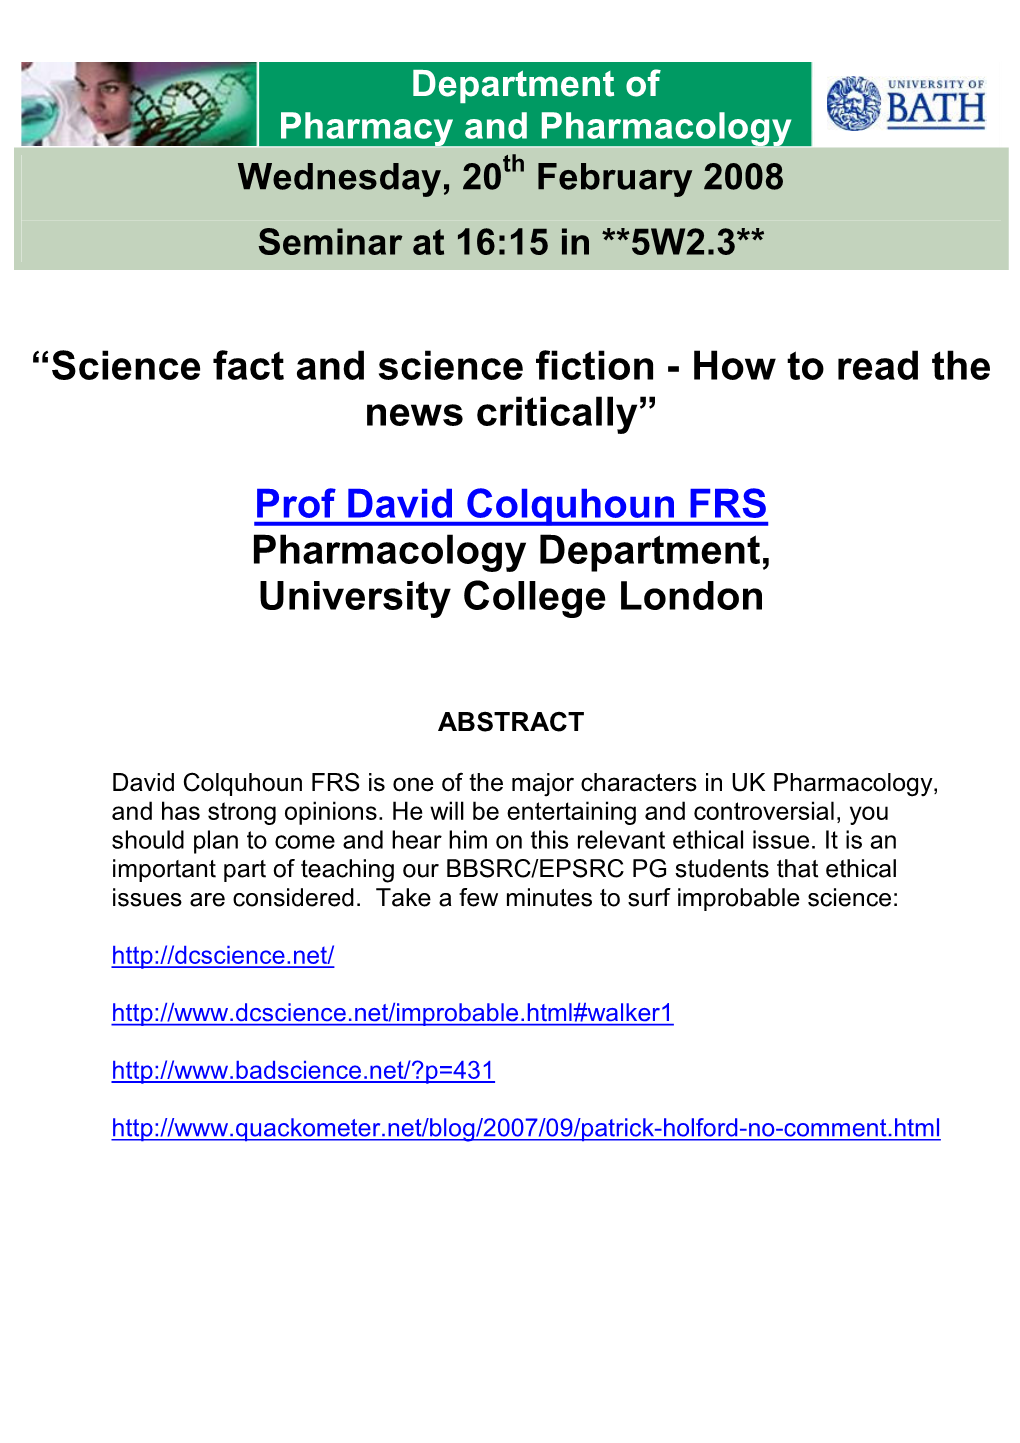 Prof David Colquhoun FRS Pharmacology Department, University College London